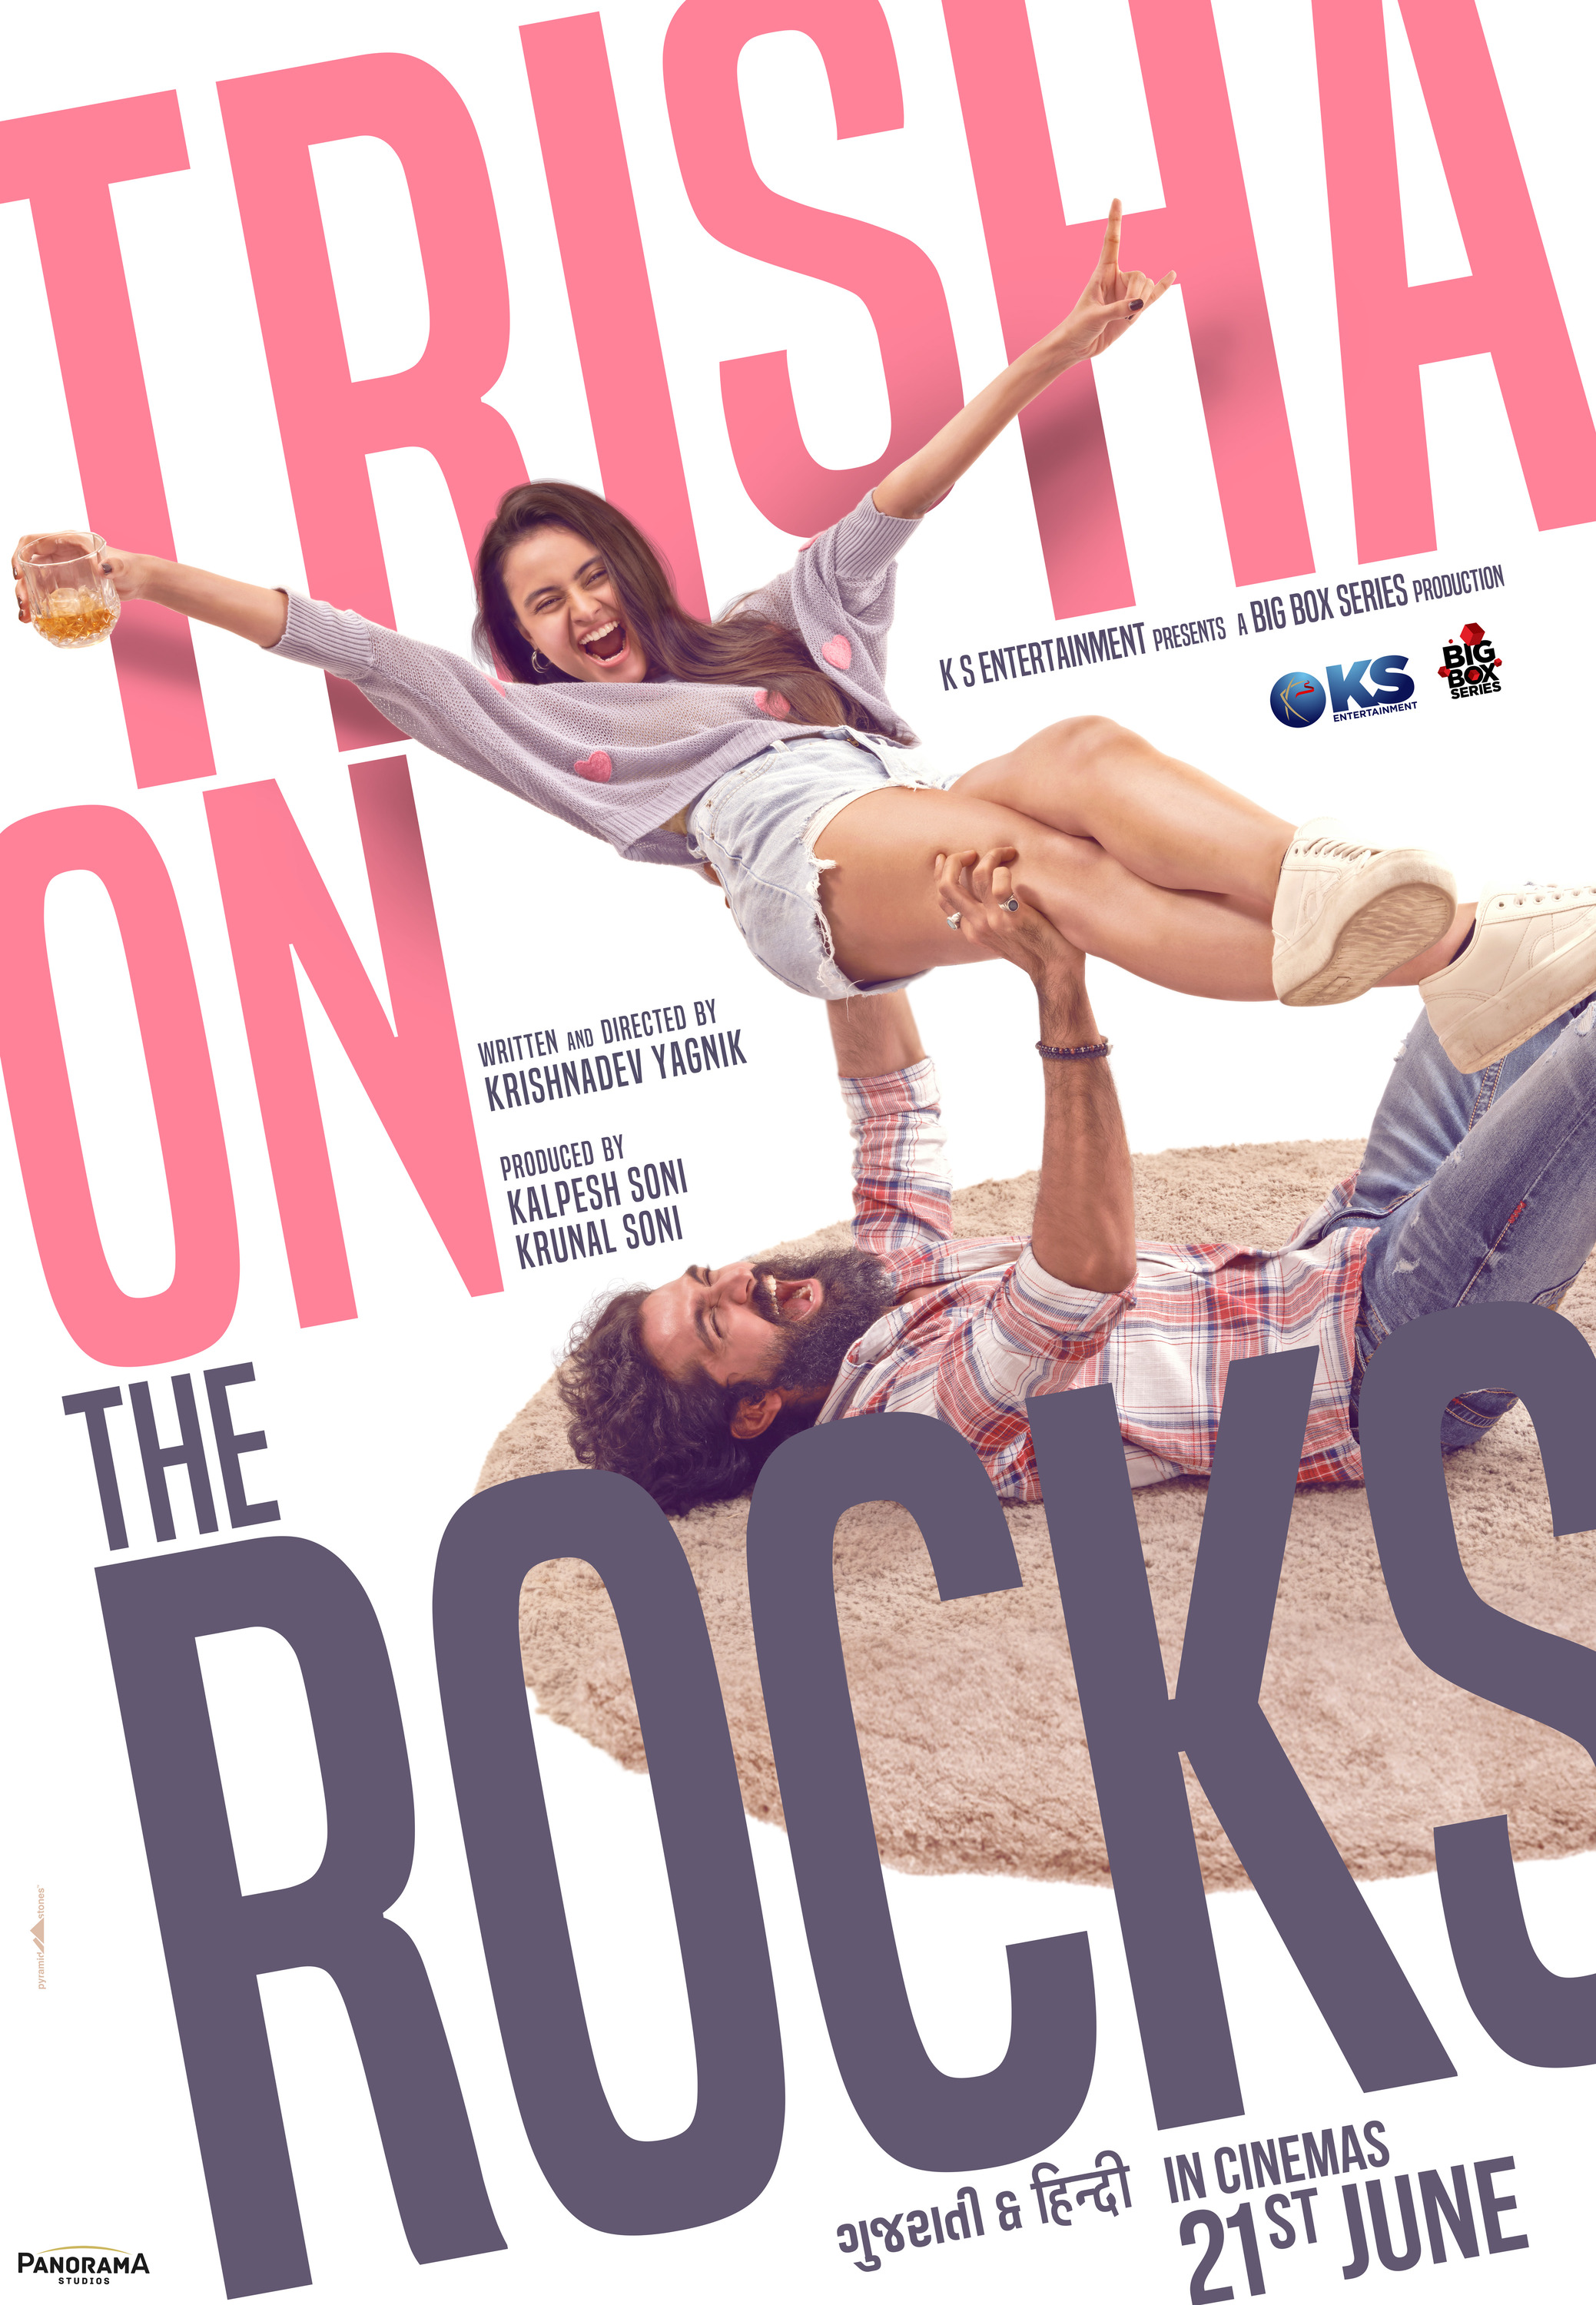 Mega Sized Movie Poster Image for Trisha on the Rocks 